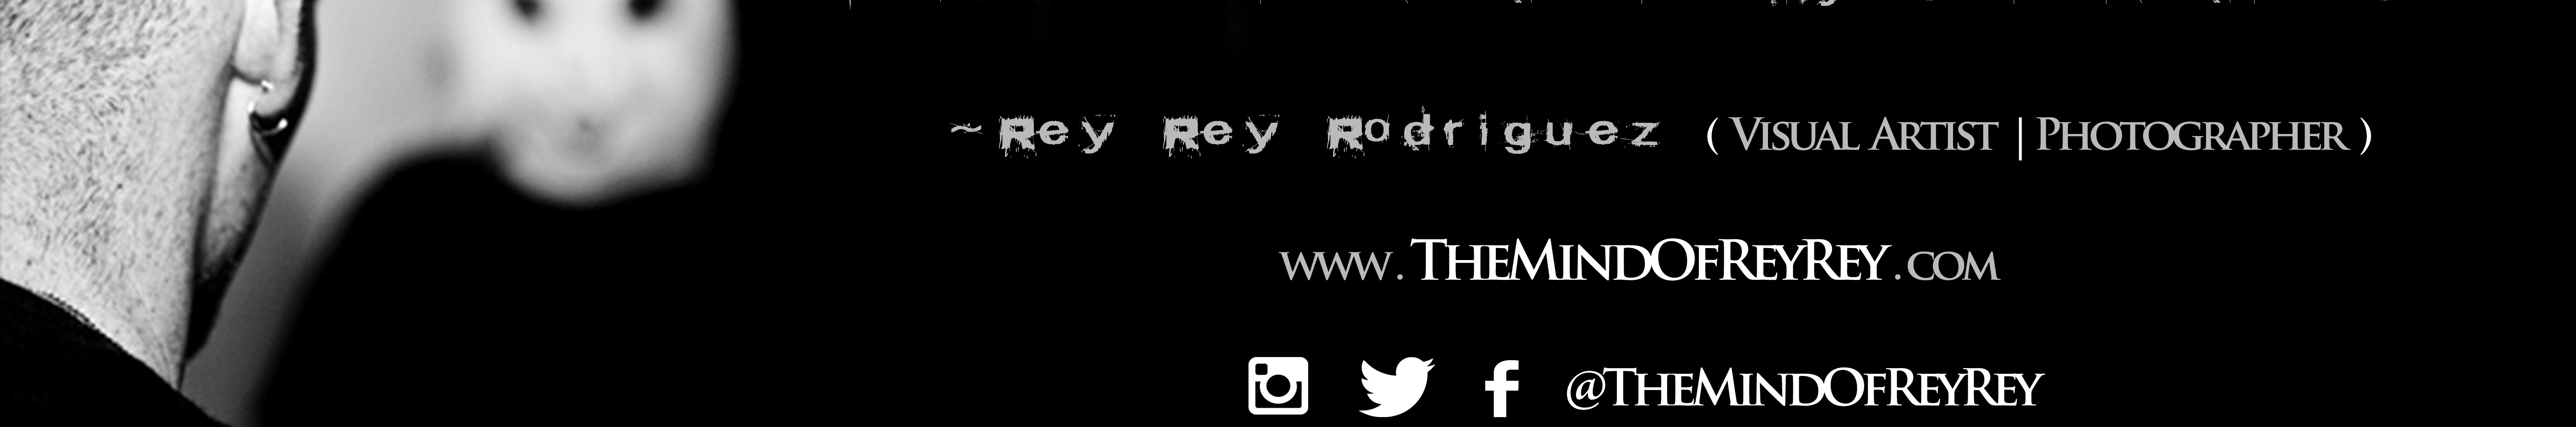 Rey Rey Rodriguez's profile banner